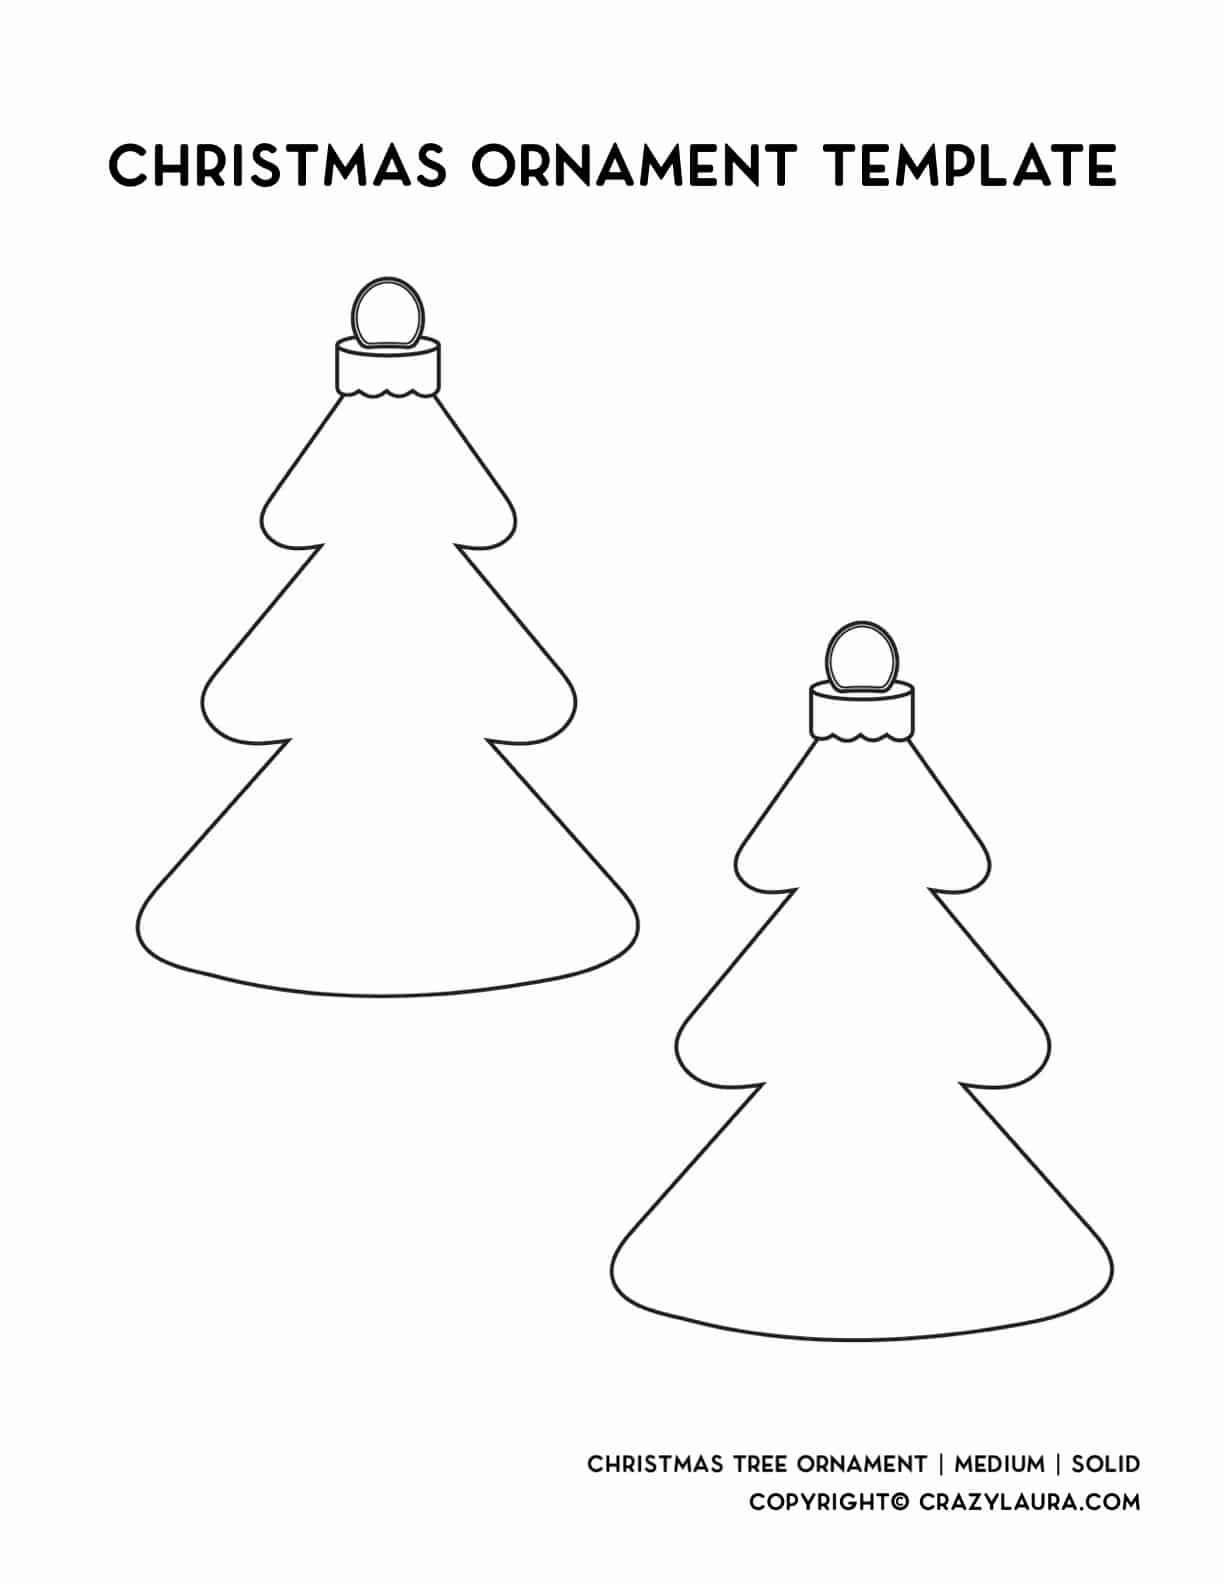 medium sized christmas tree ornament downlaod